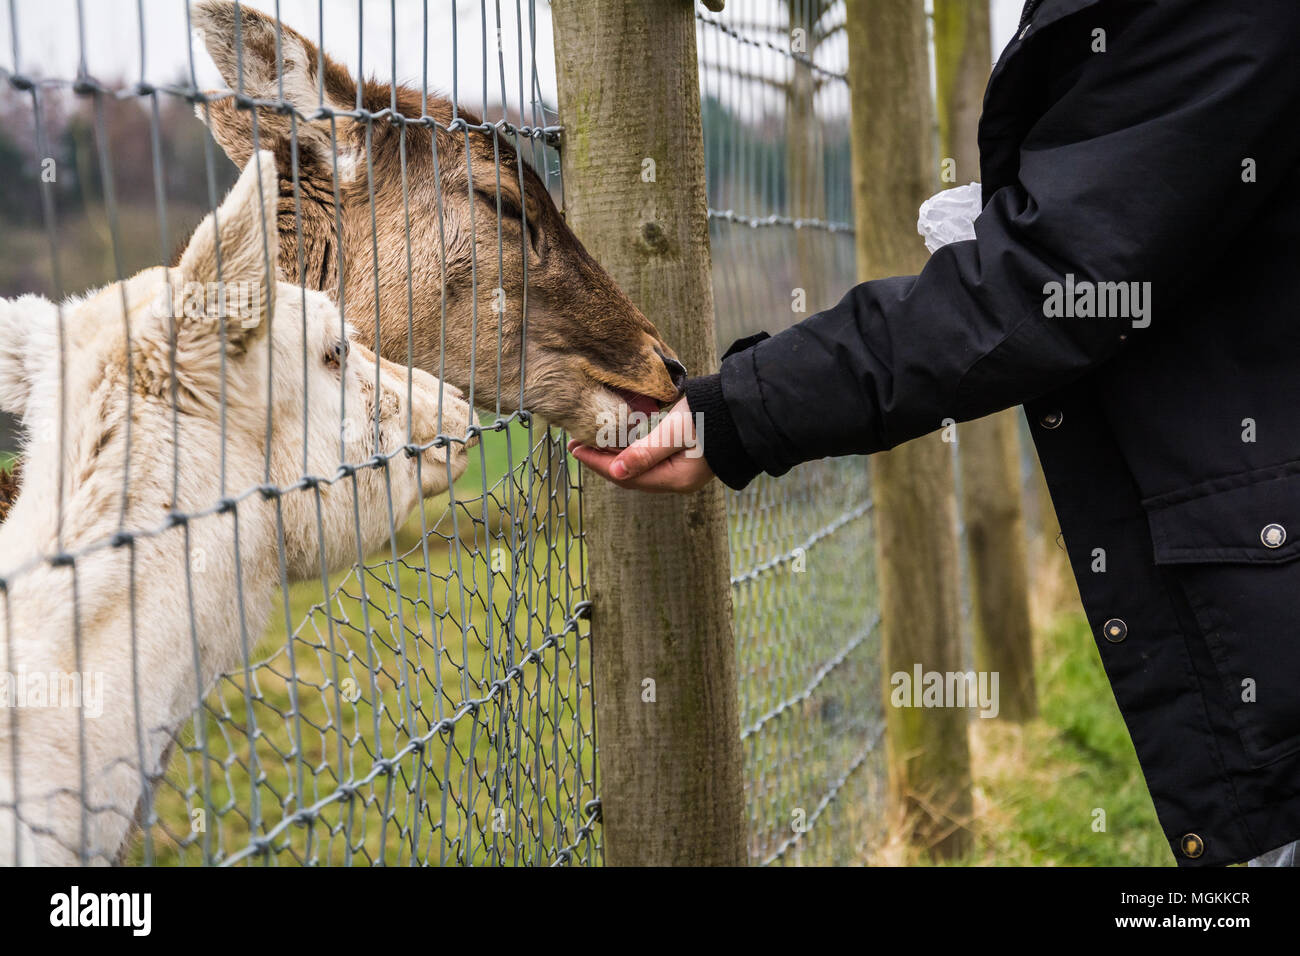 Young boy hand-feeding a fallow deer (dama dama) at a petting farm, UK. Stock Photo